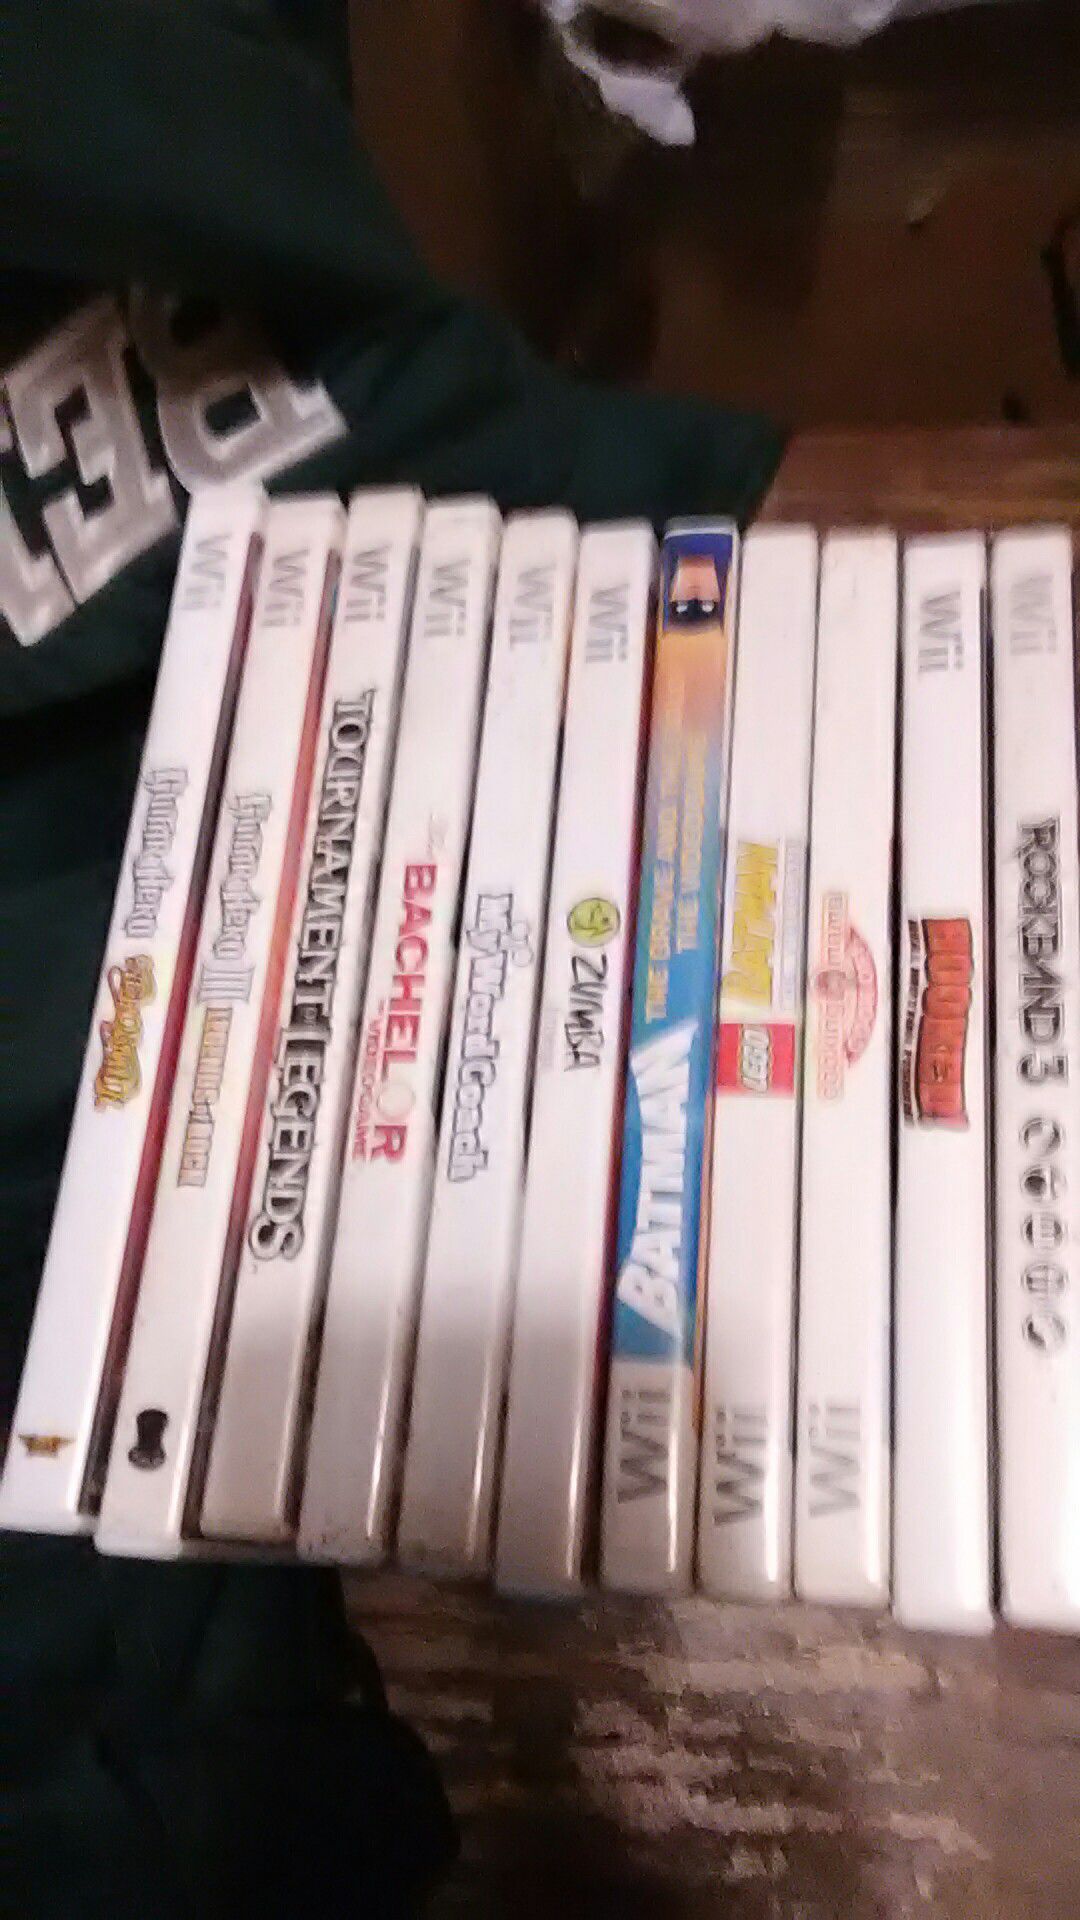 Wii bundle of 11 games